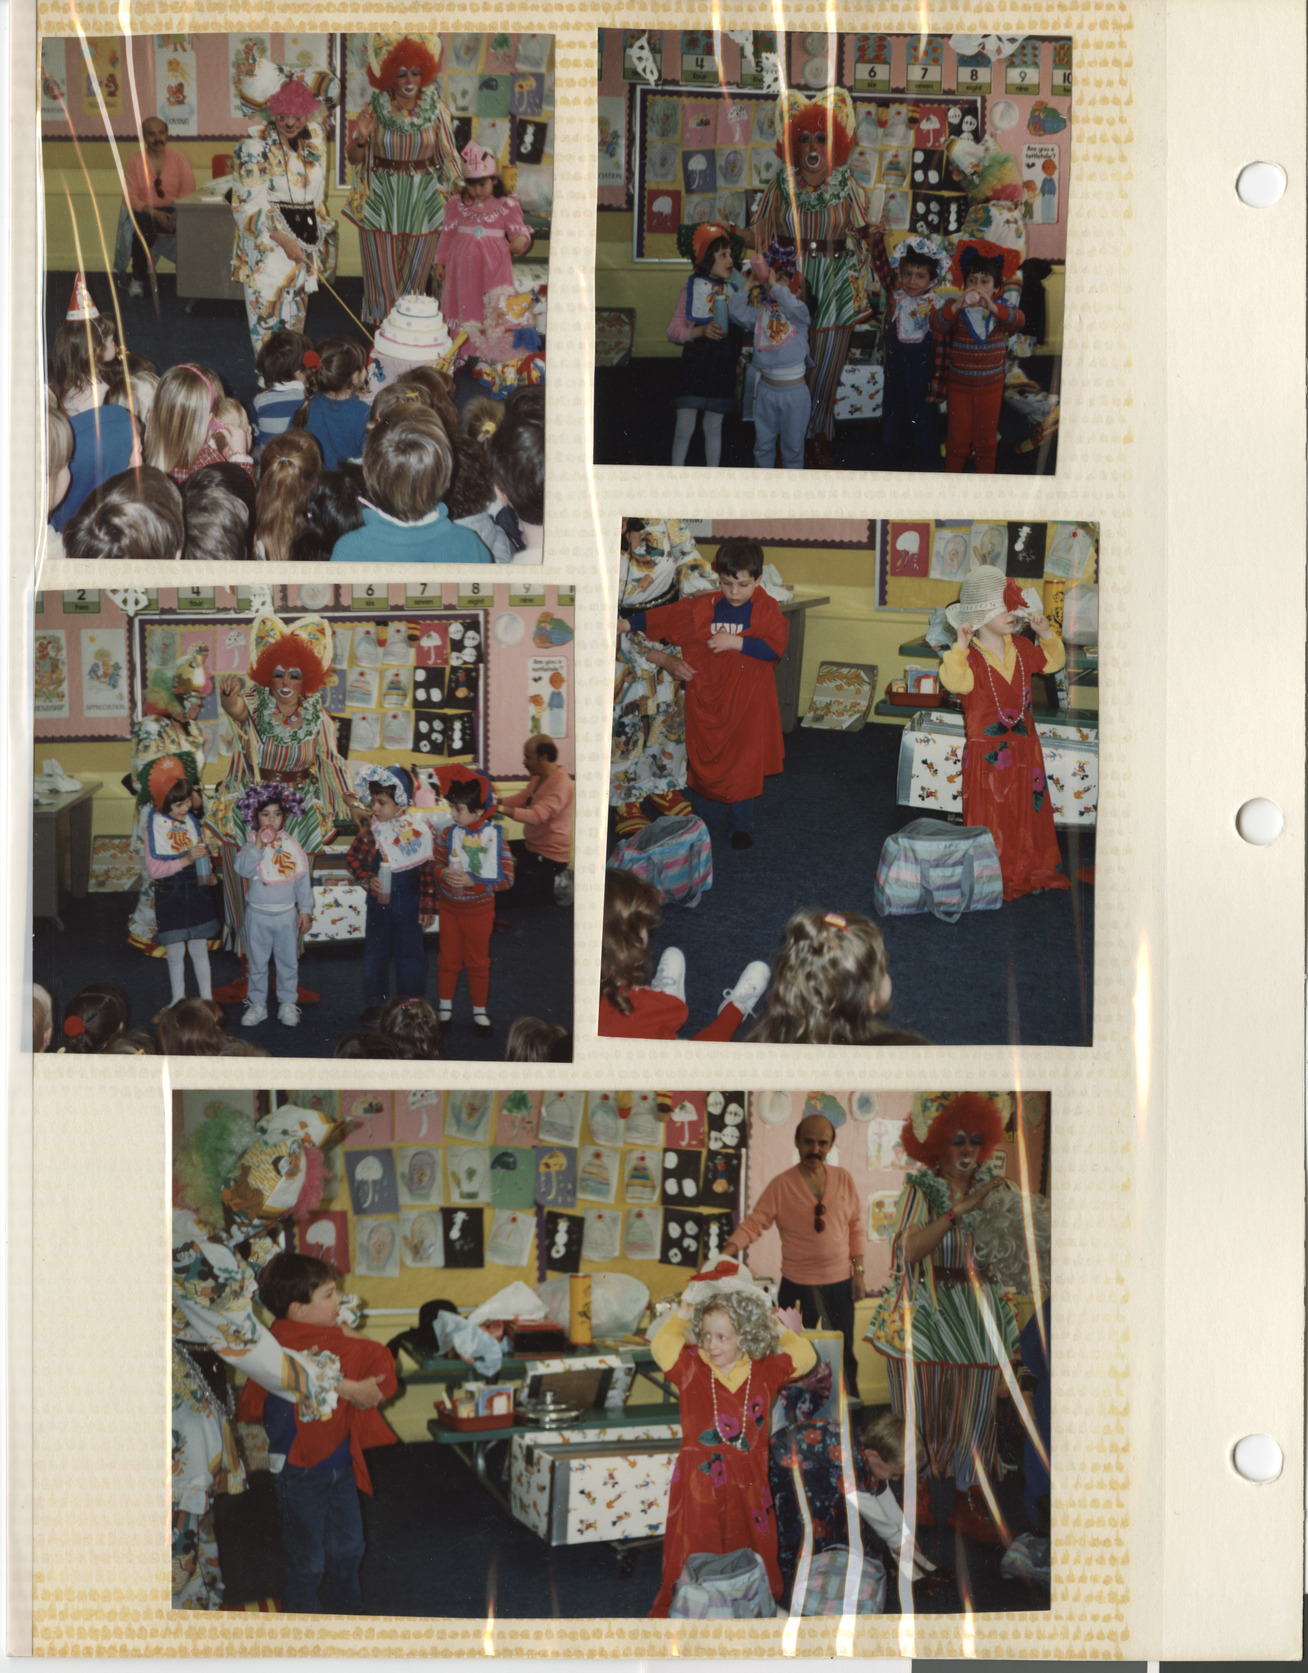 Temple Beth Sholom Preschool photo album, page 24